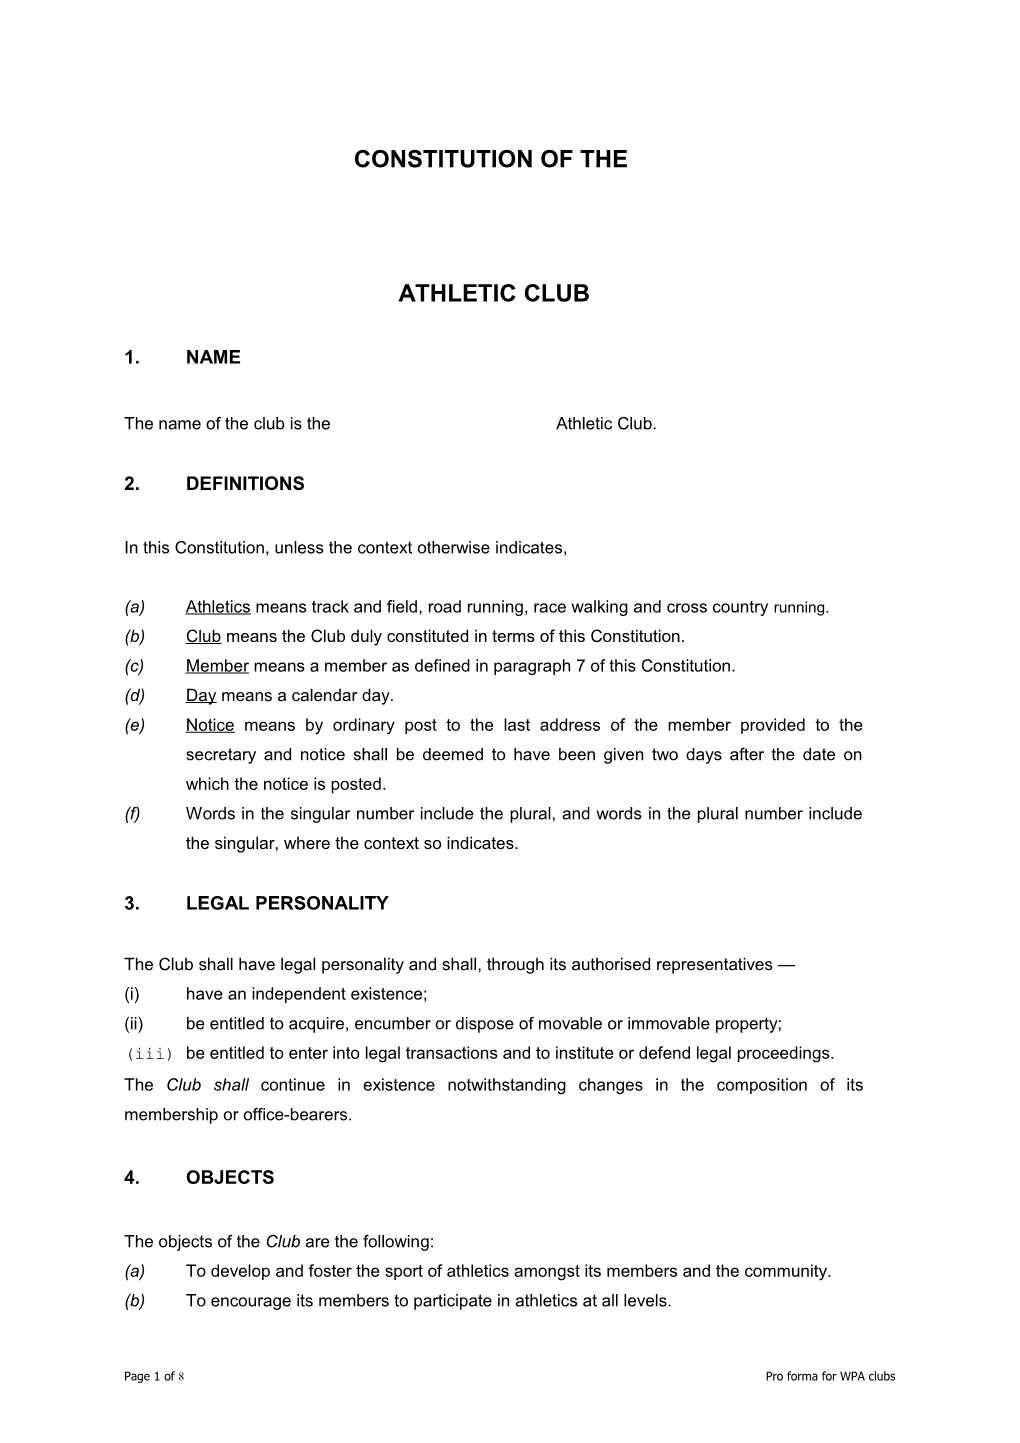 Constitution of the Uct Athletics Club